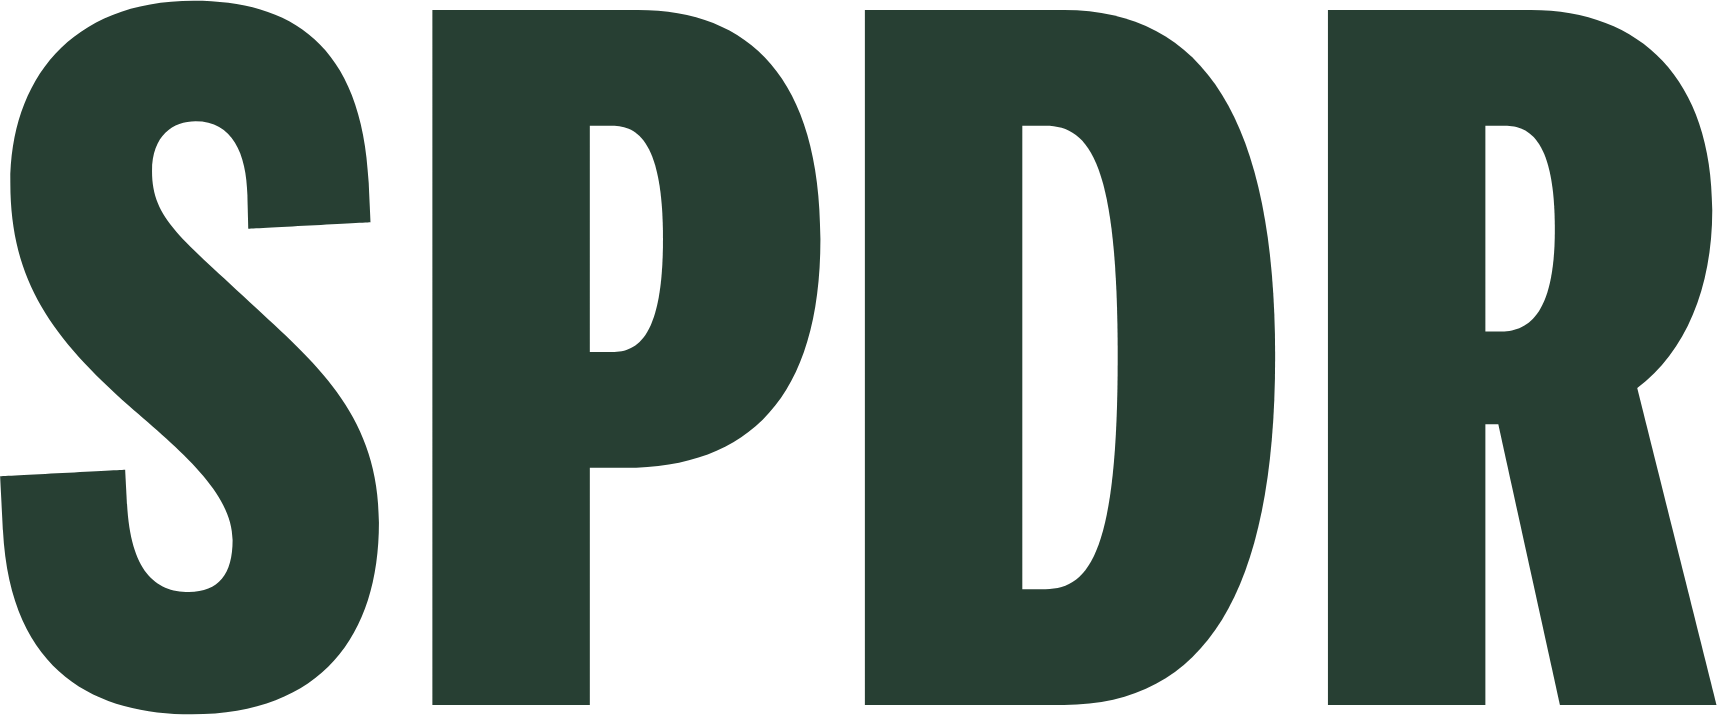 SPDR S&P 500 ETF Trust logo (transparent PNG)